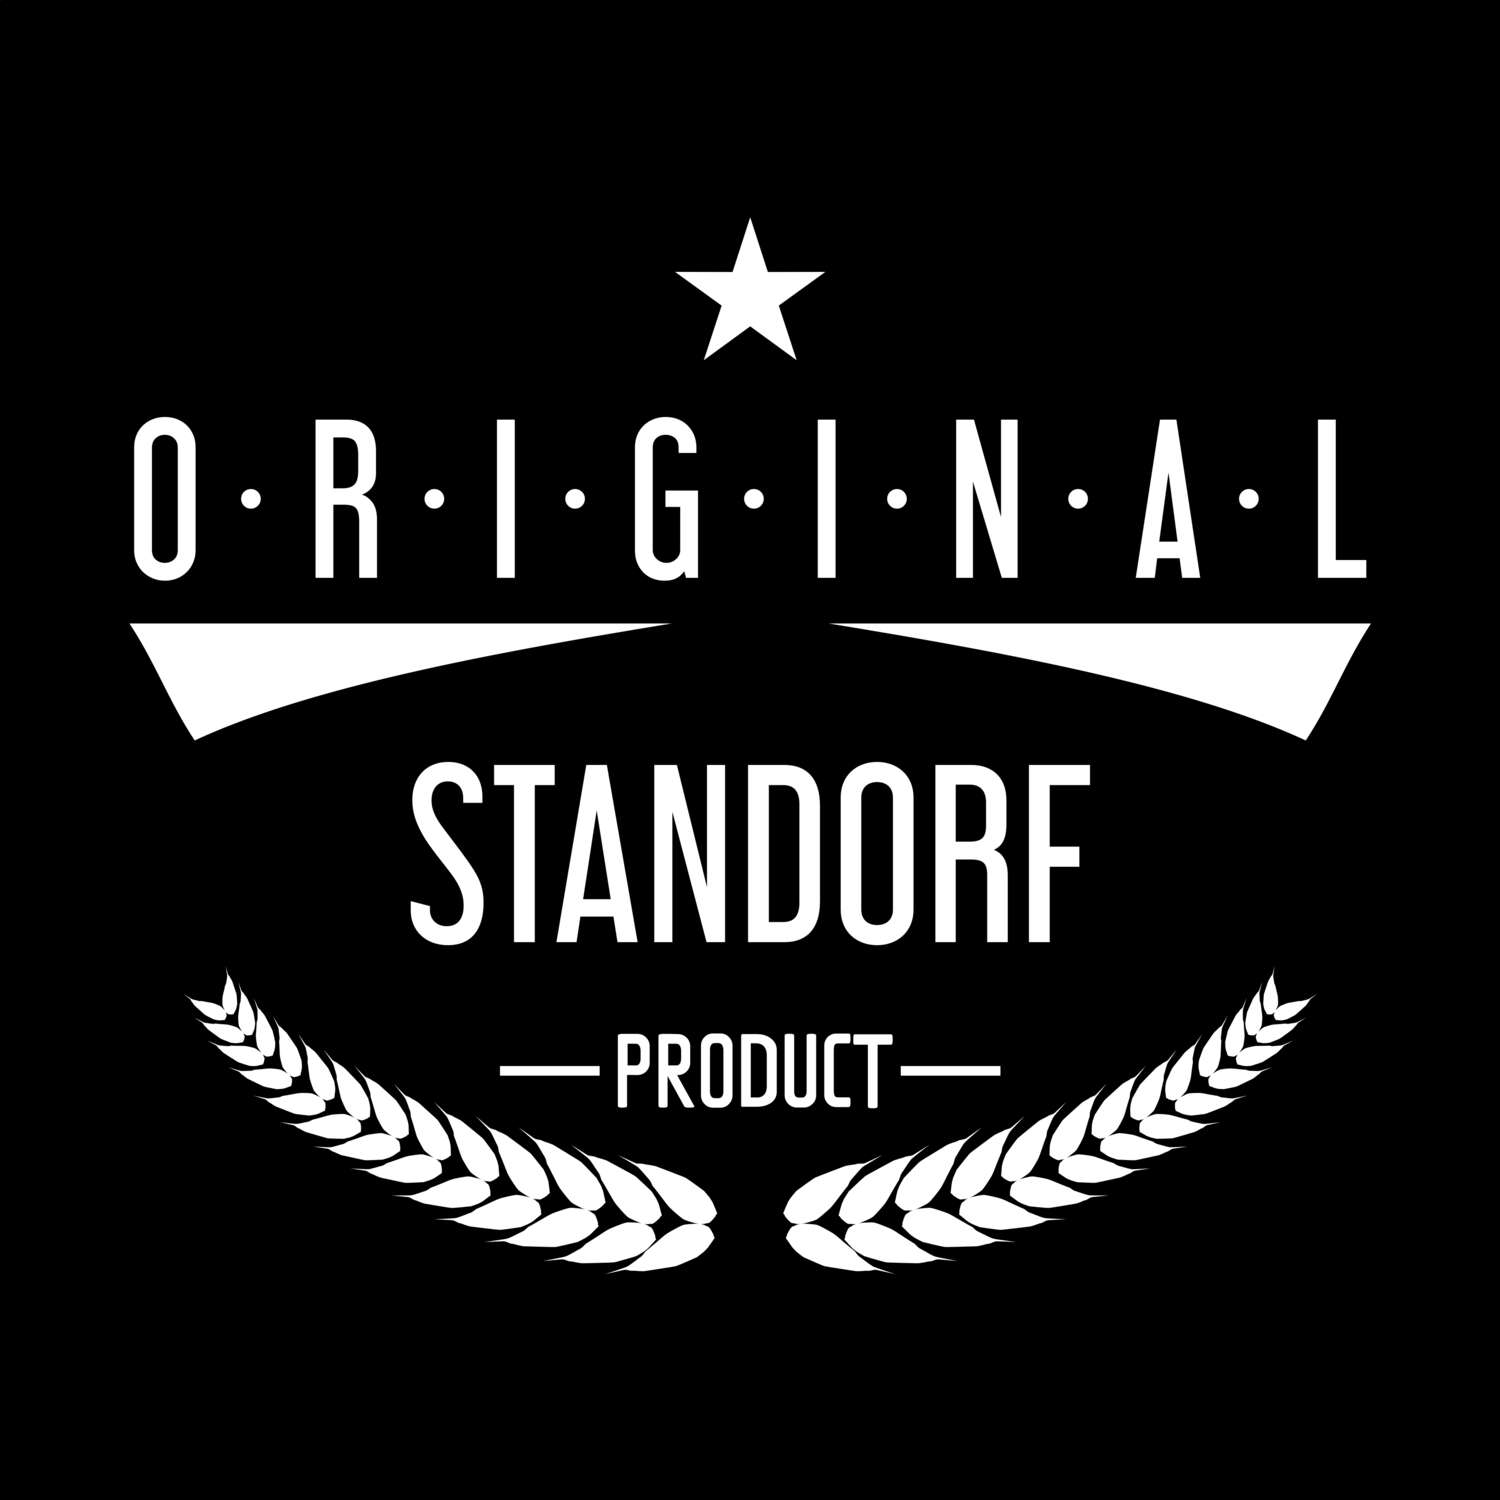 Standorf T-Shirt »Original Product«